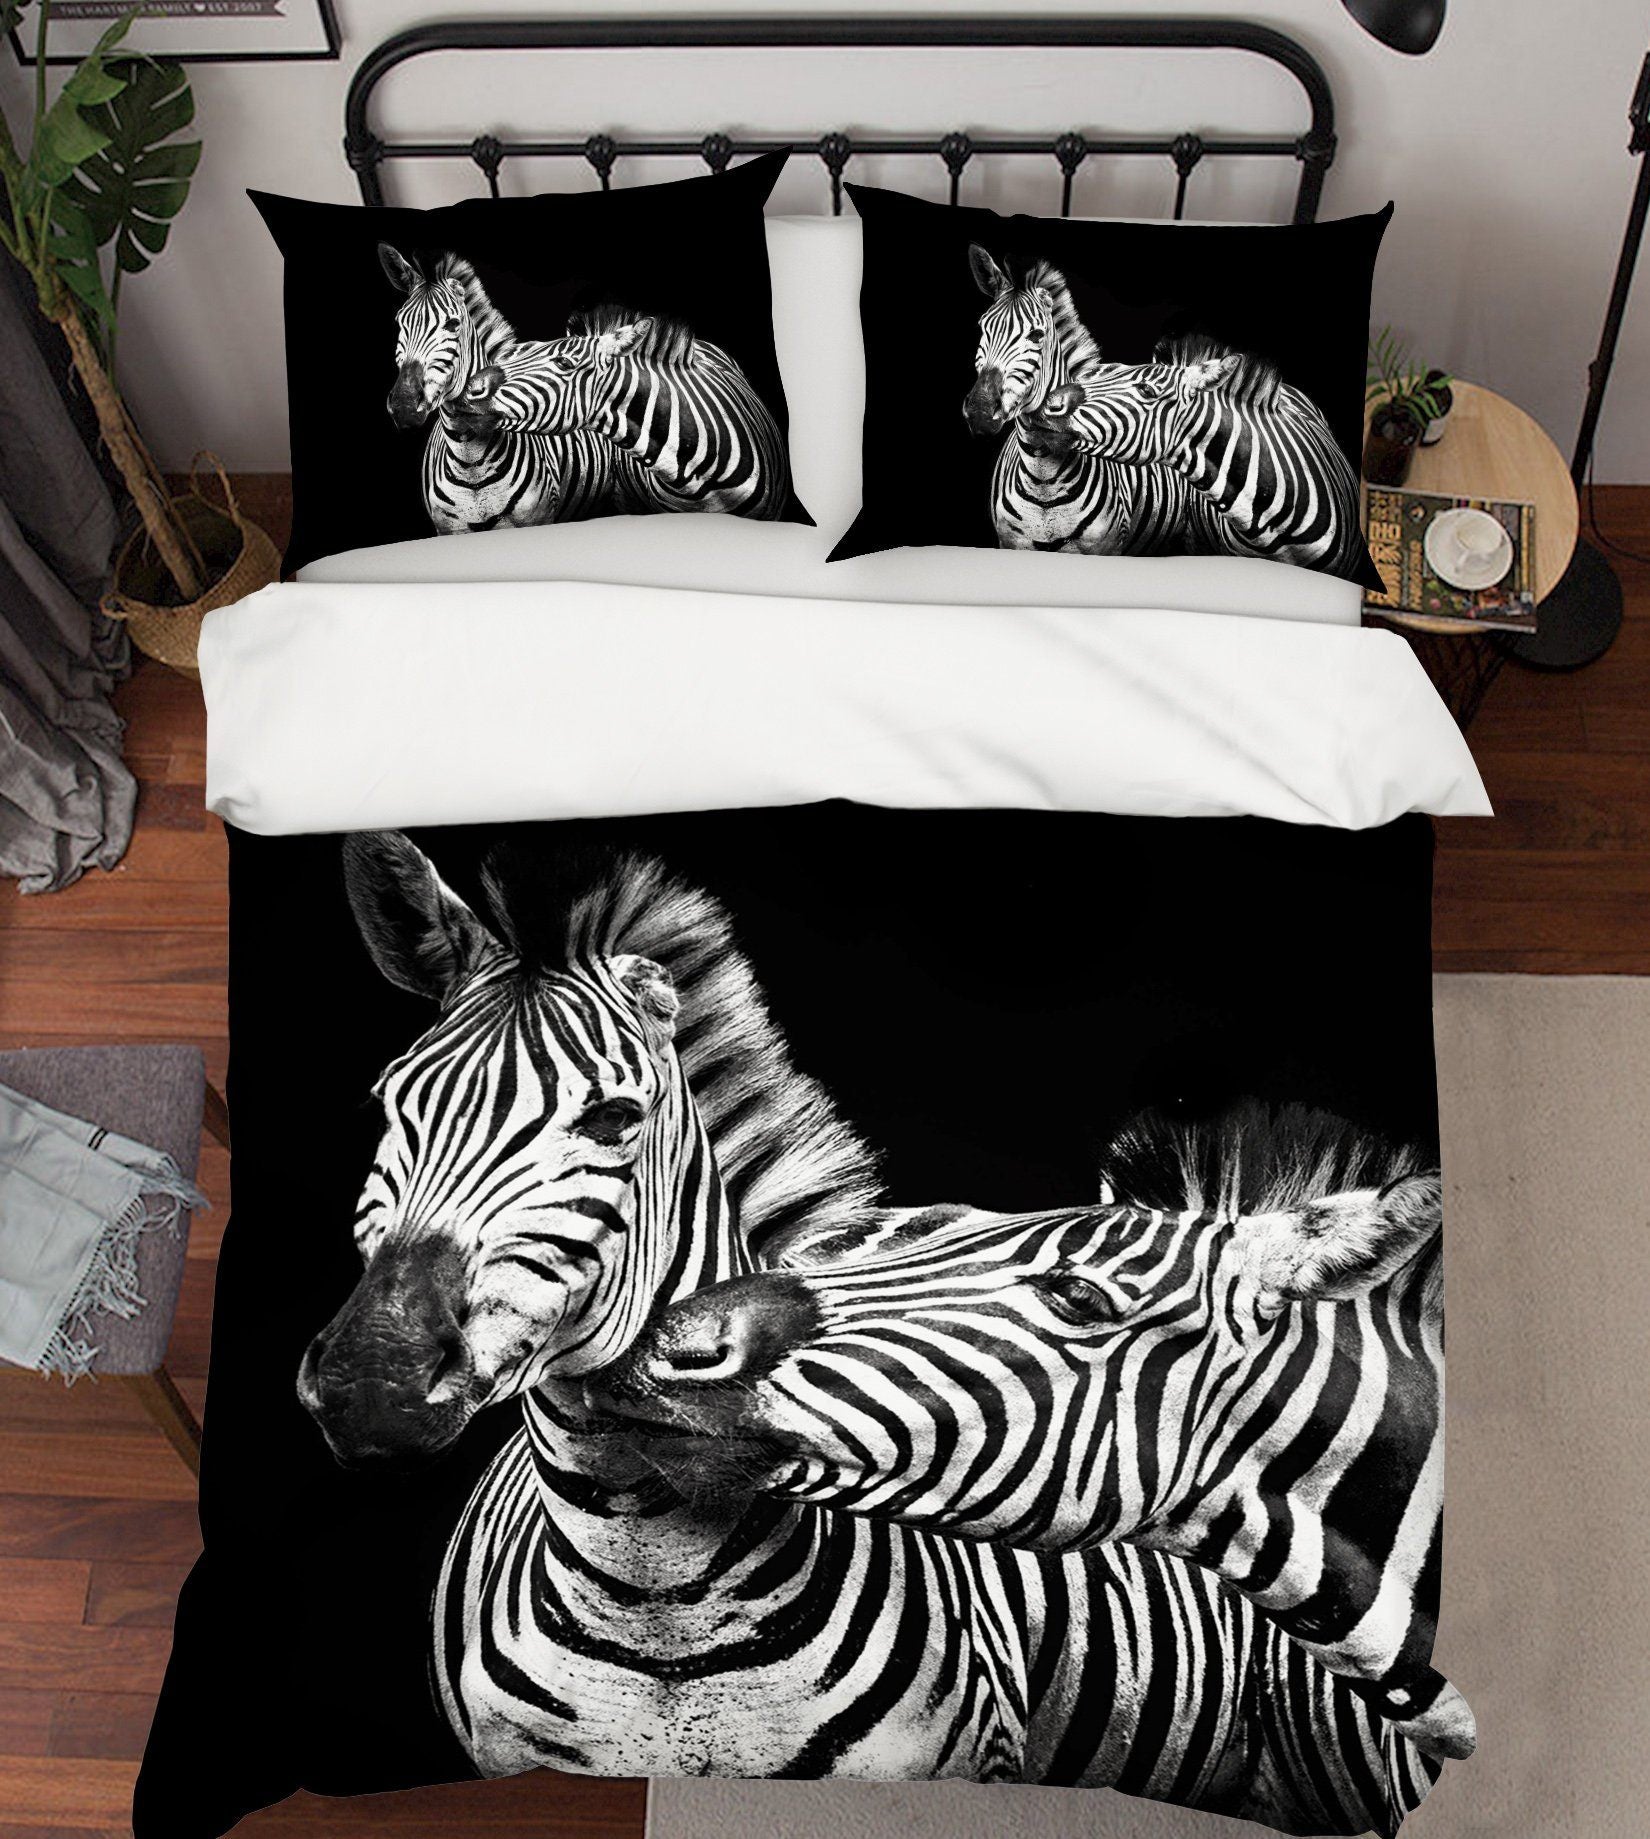 3D Zebra 2016 Bed Pillowcases Quilt Quiet Covers AJ Creativity Home 